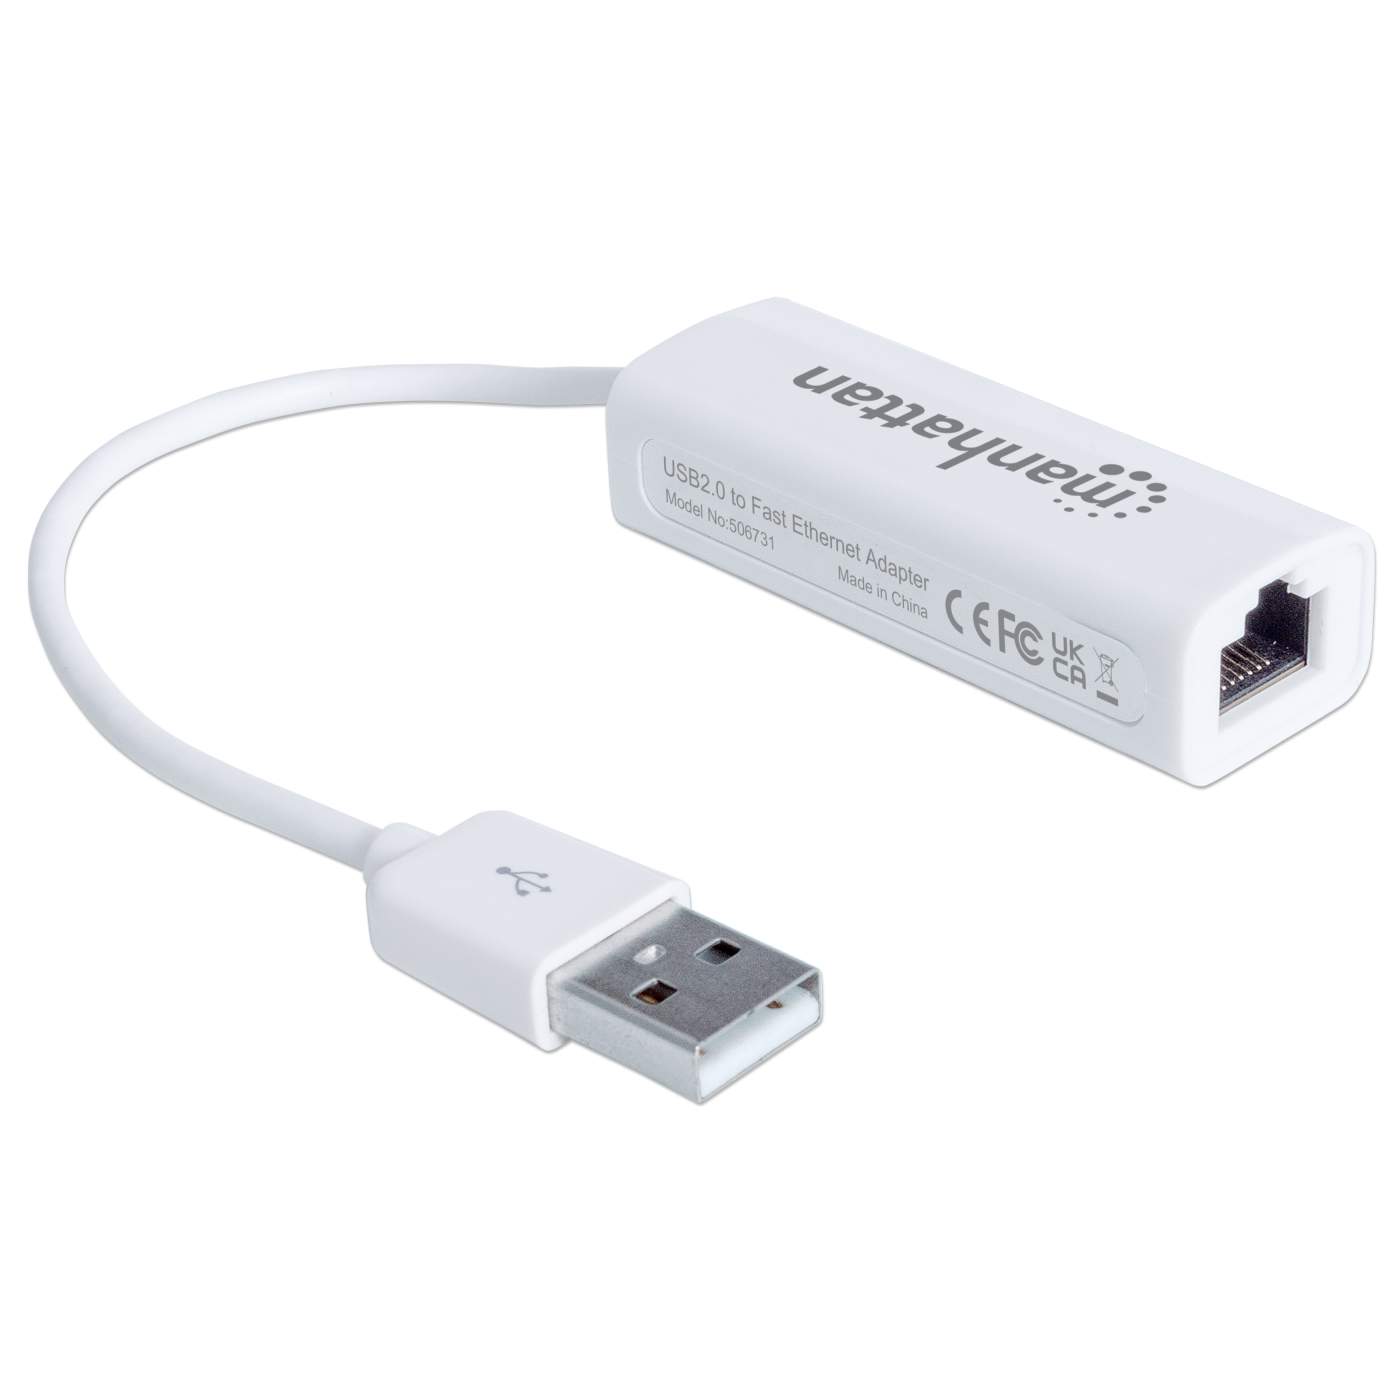 USB 2.0 Fast Ethernet Adapter Image 3